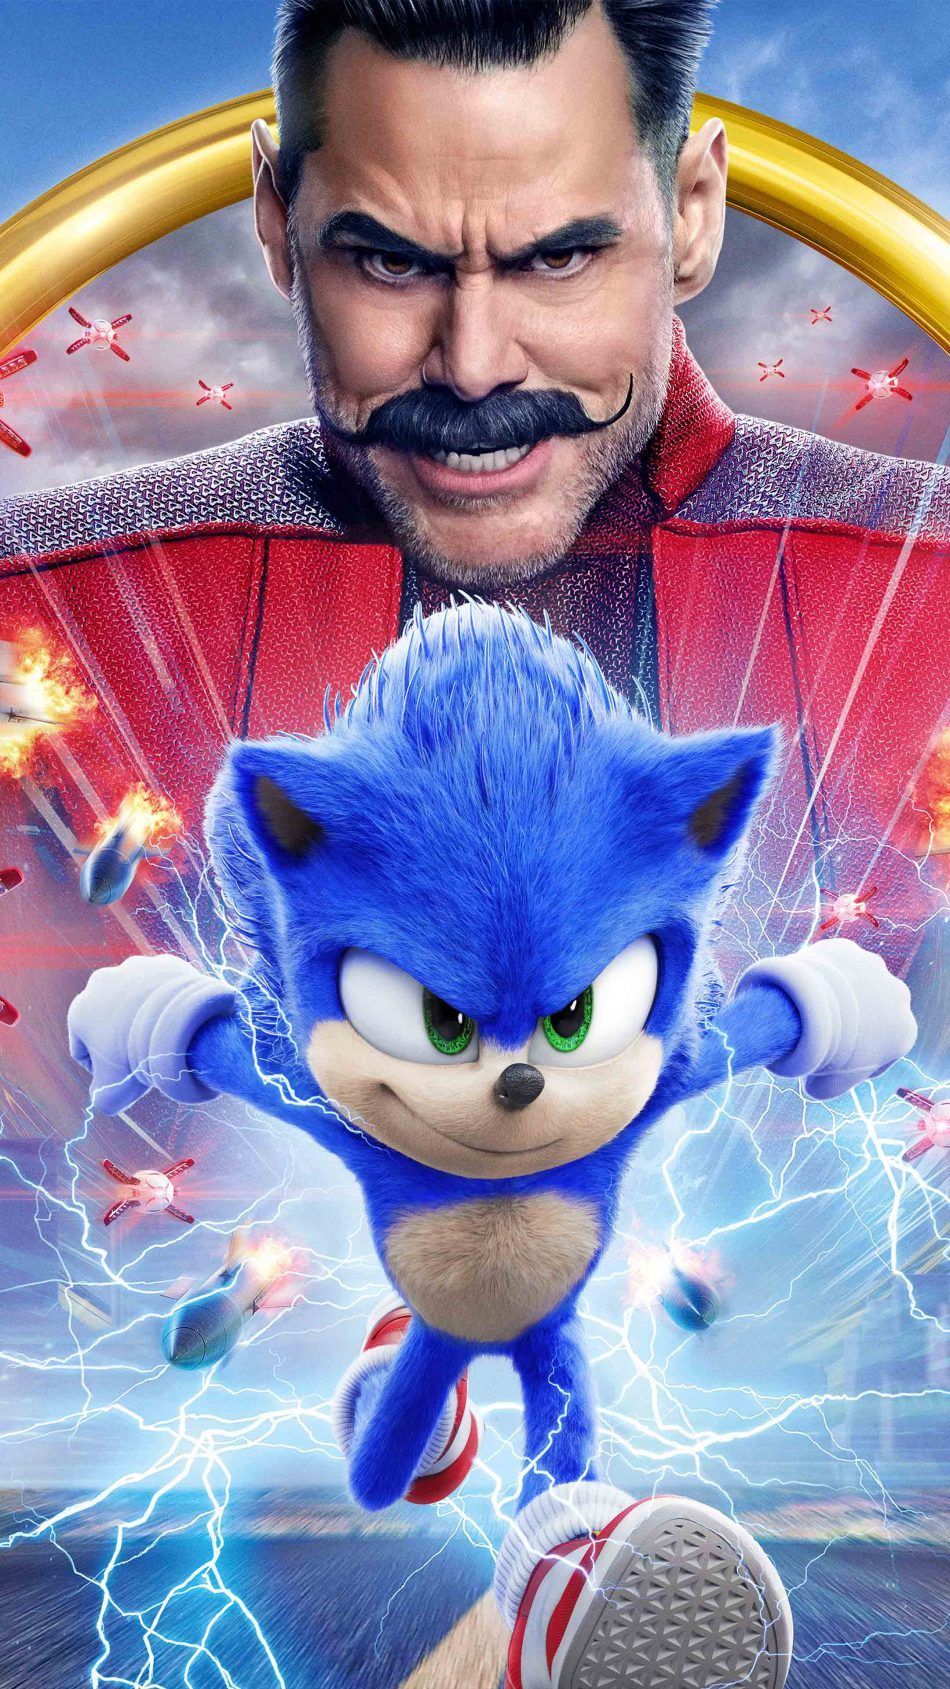 Sonic The Hedgehog 2020 4K Ultra HD Mobile Wallpaper. Sonic the hedgehog, Hedgehog movie, Sonic